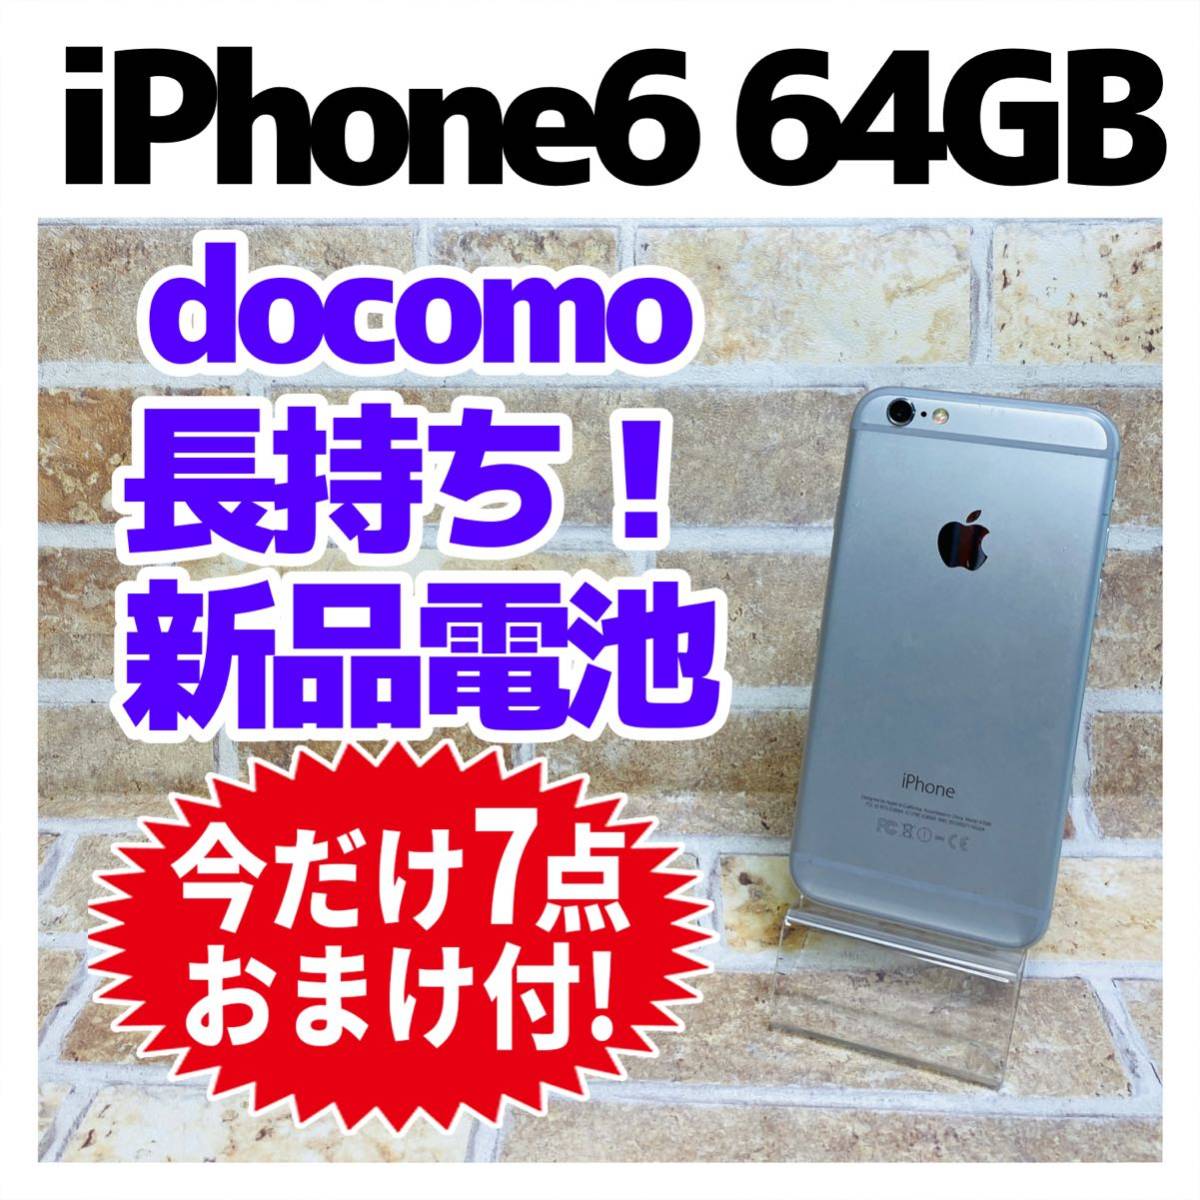 iPhone Plus Silver 64 GB docomo